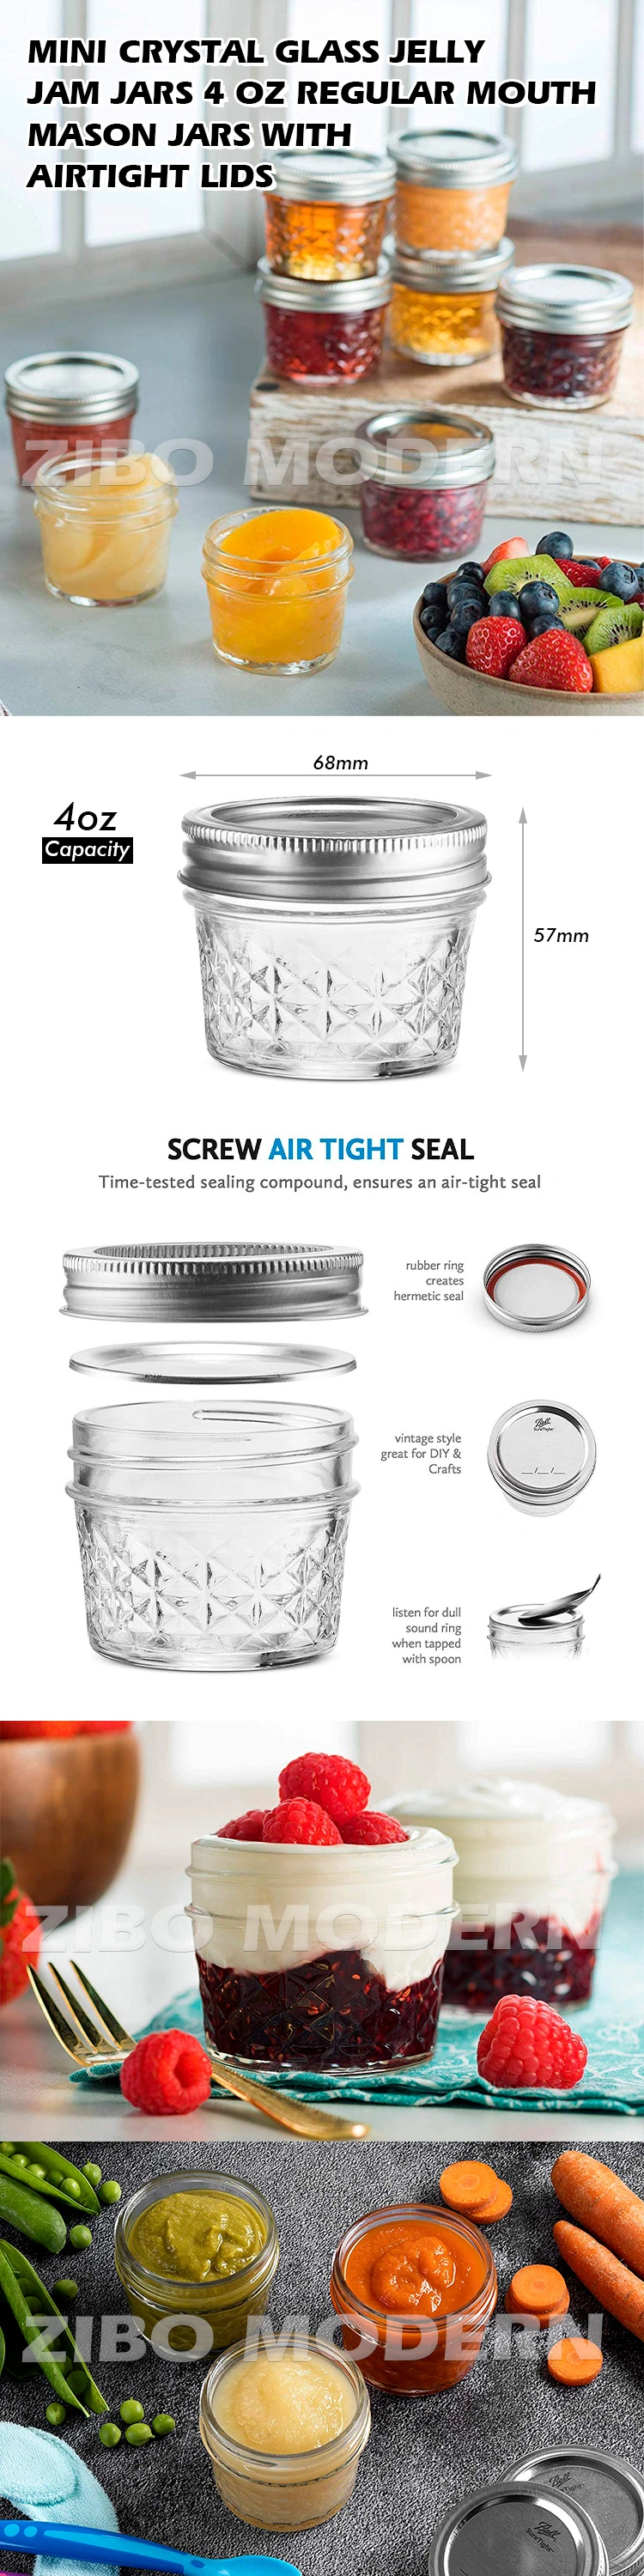 Wholesale Mini Crystal Glass Jelly Jam Jars 4 Oz Regular Mouth Mason Jars with Airtight Lids